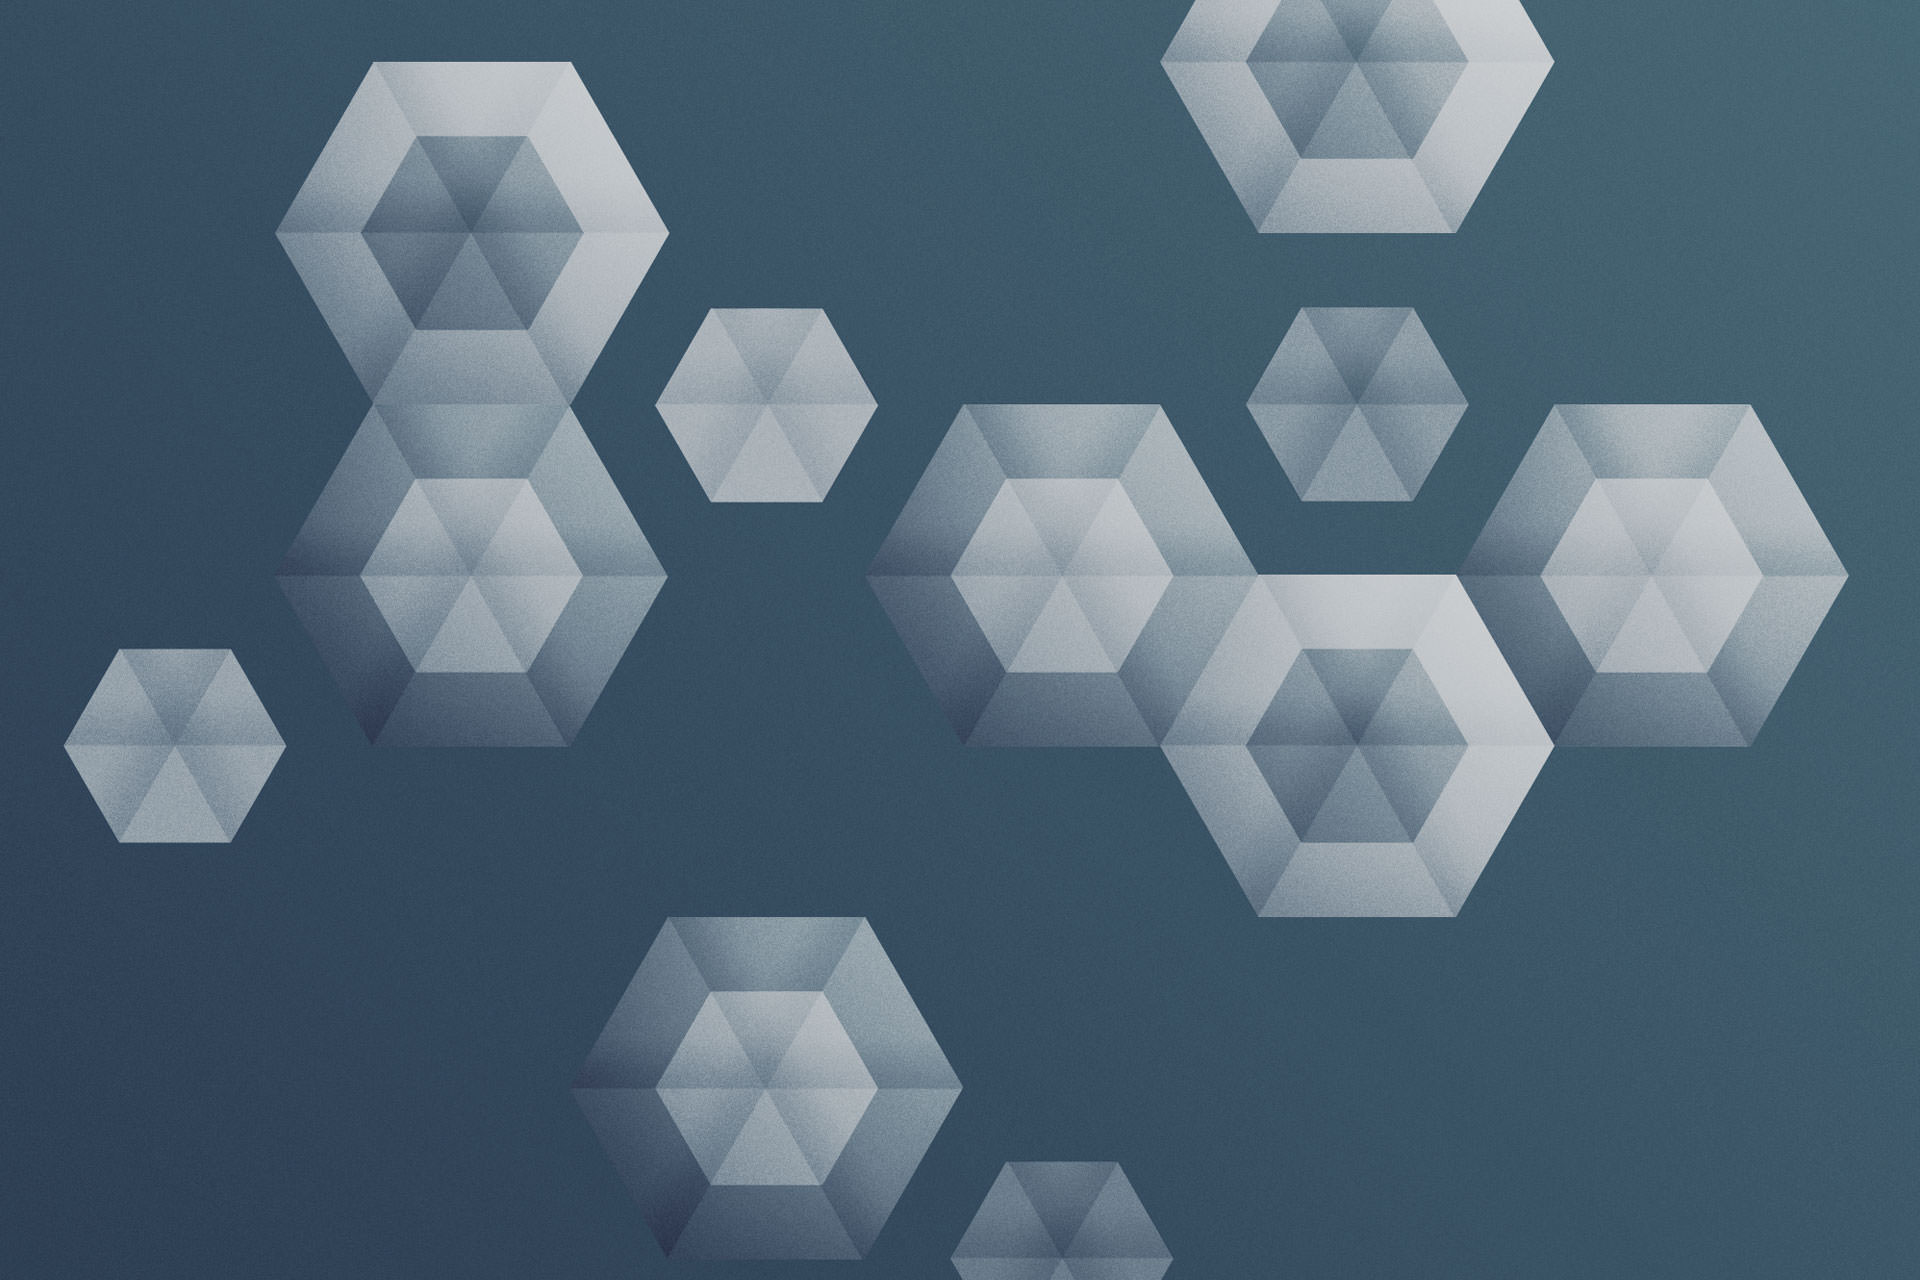 cyanogenmod壁紙,青い,パターン,対称,設計,壁紙